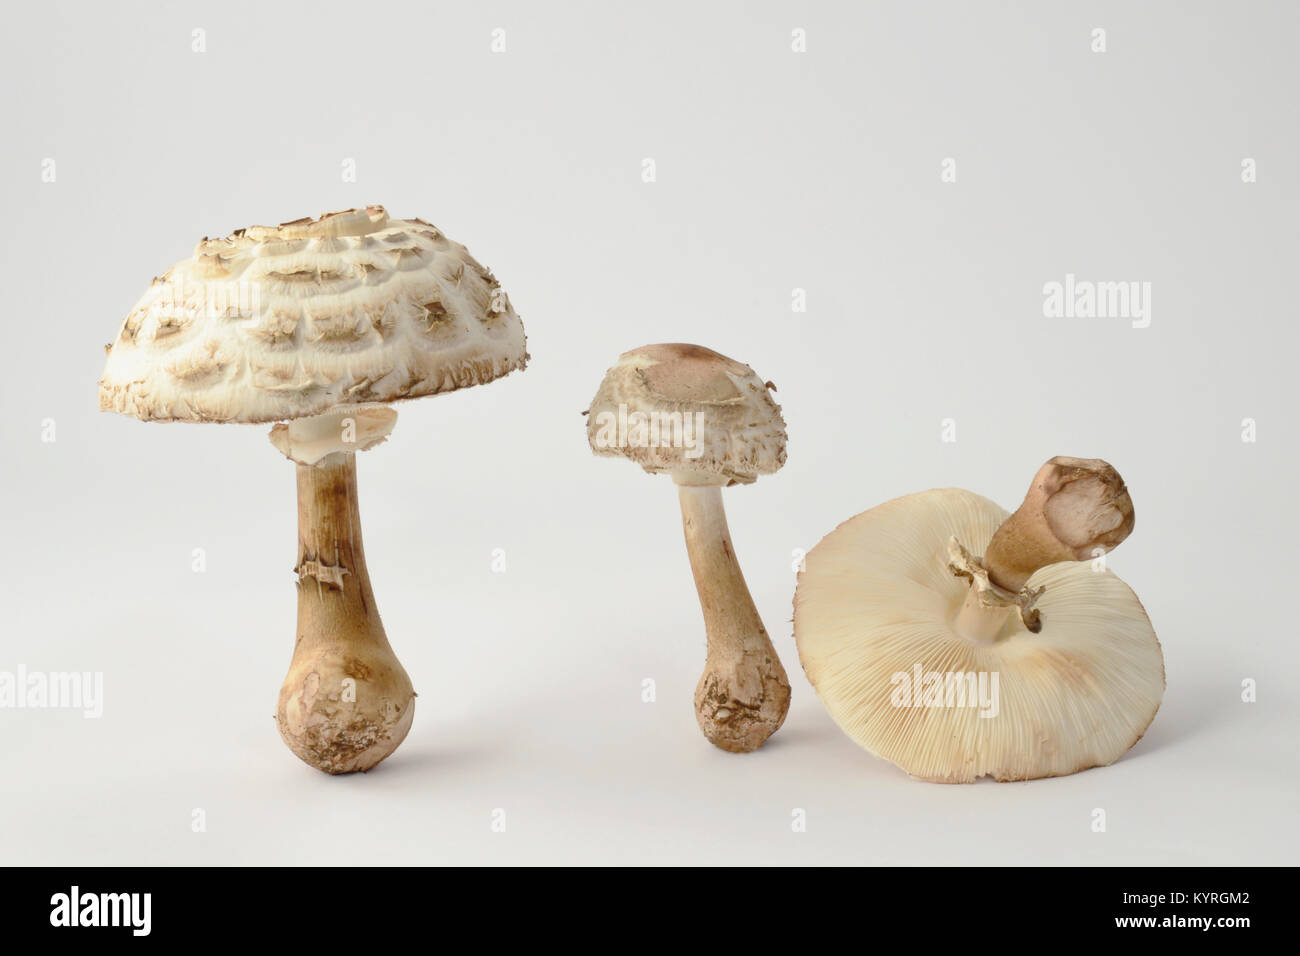 Parasol Mushroom (Macrolepiota procera), three fruiting bodies of different ages as Studio image Stock Photo